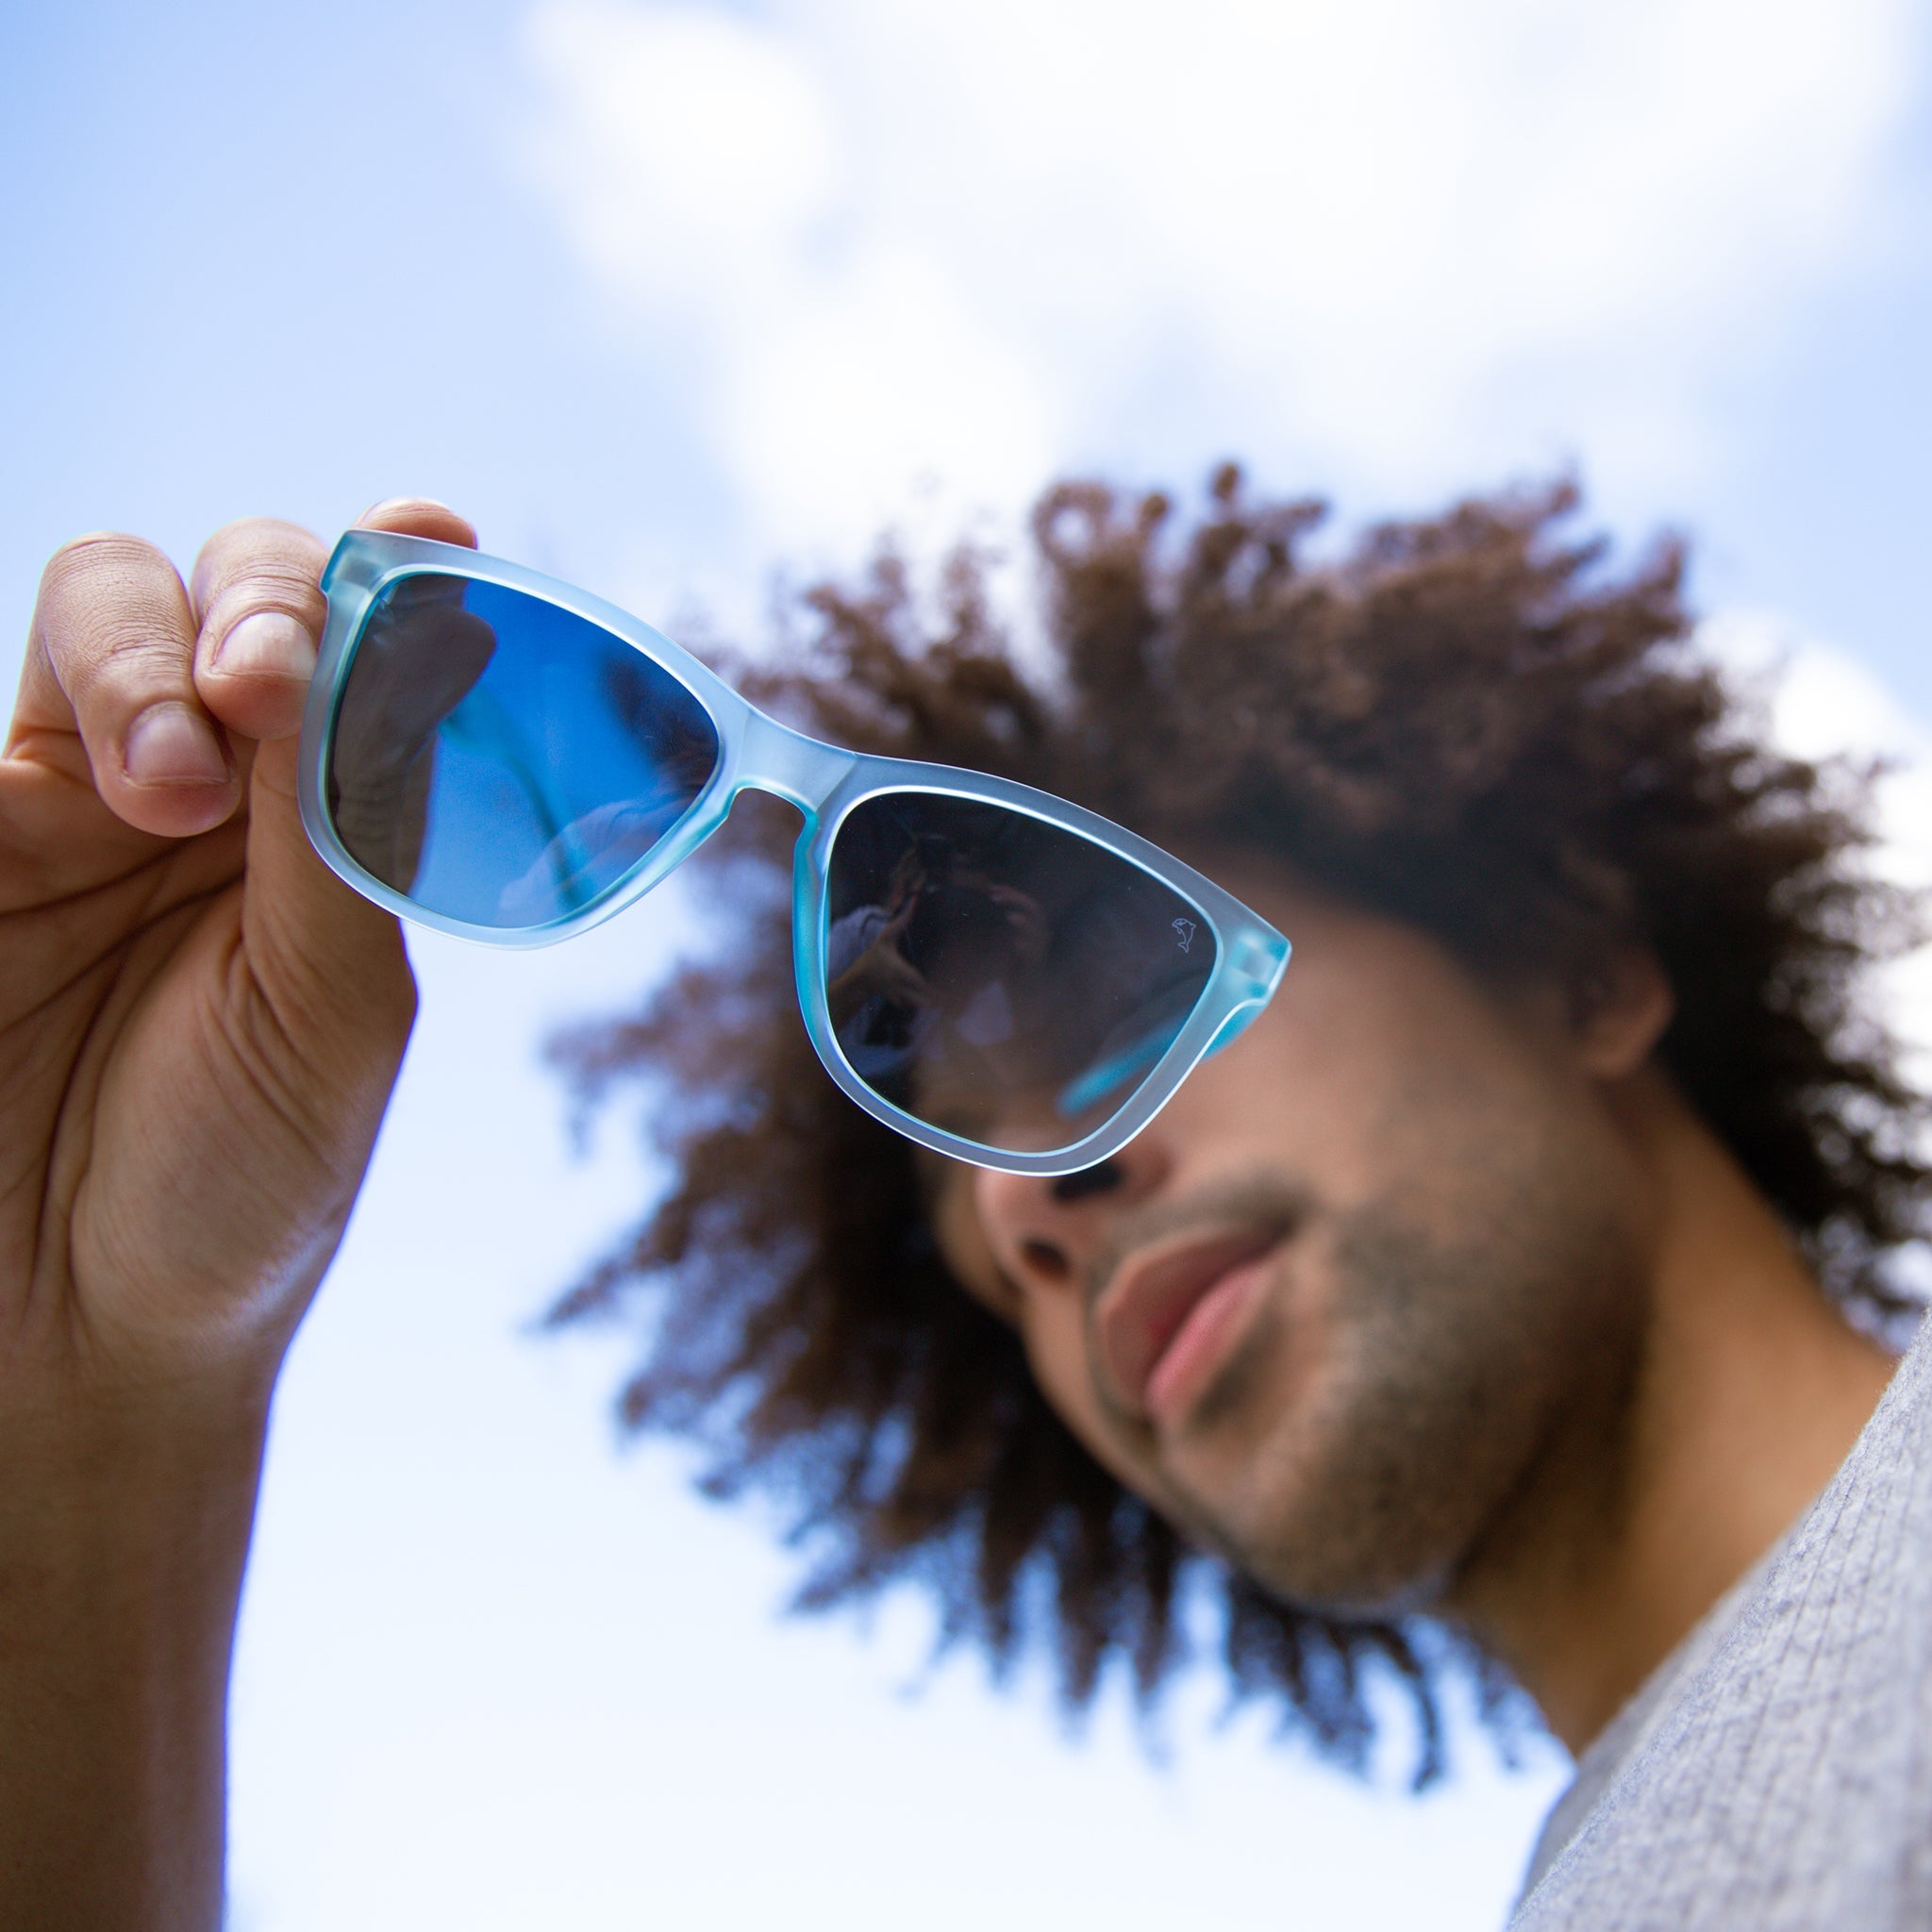 Biscayners Sunglasses |  Sonesta Light Blue